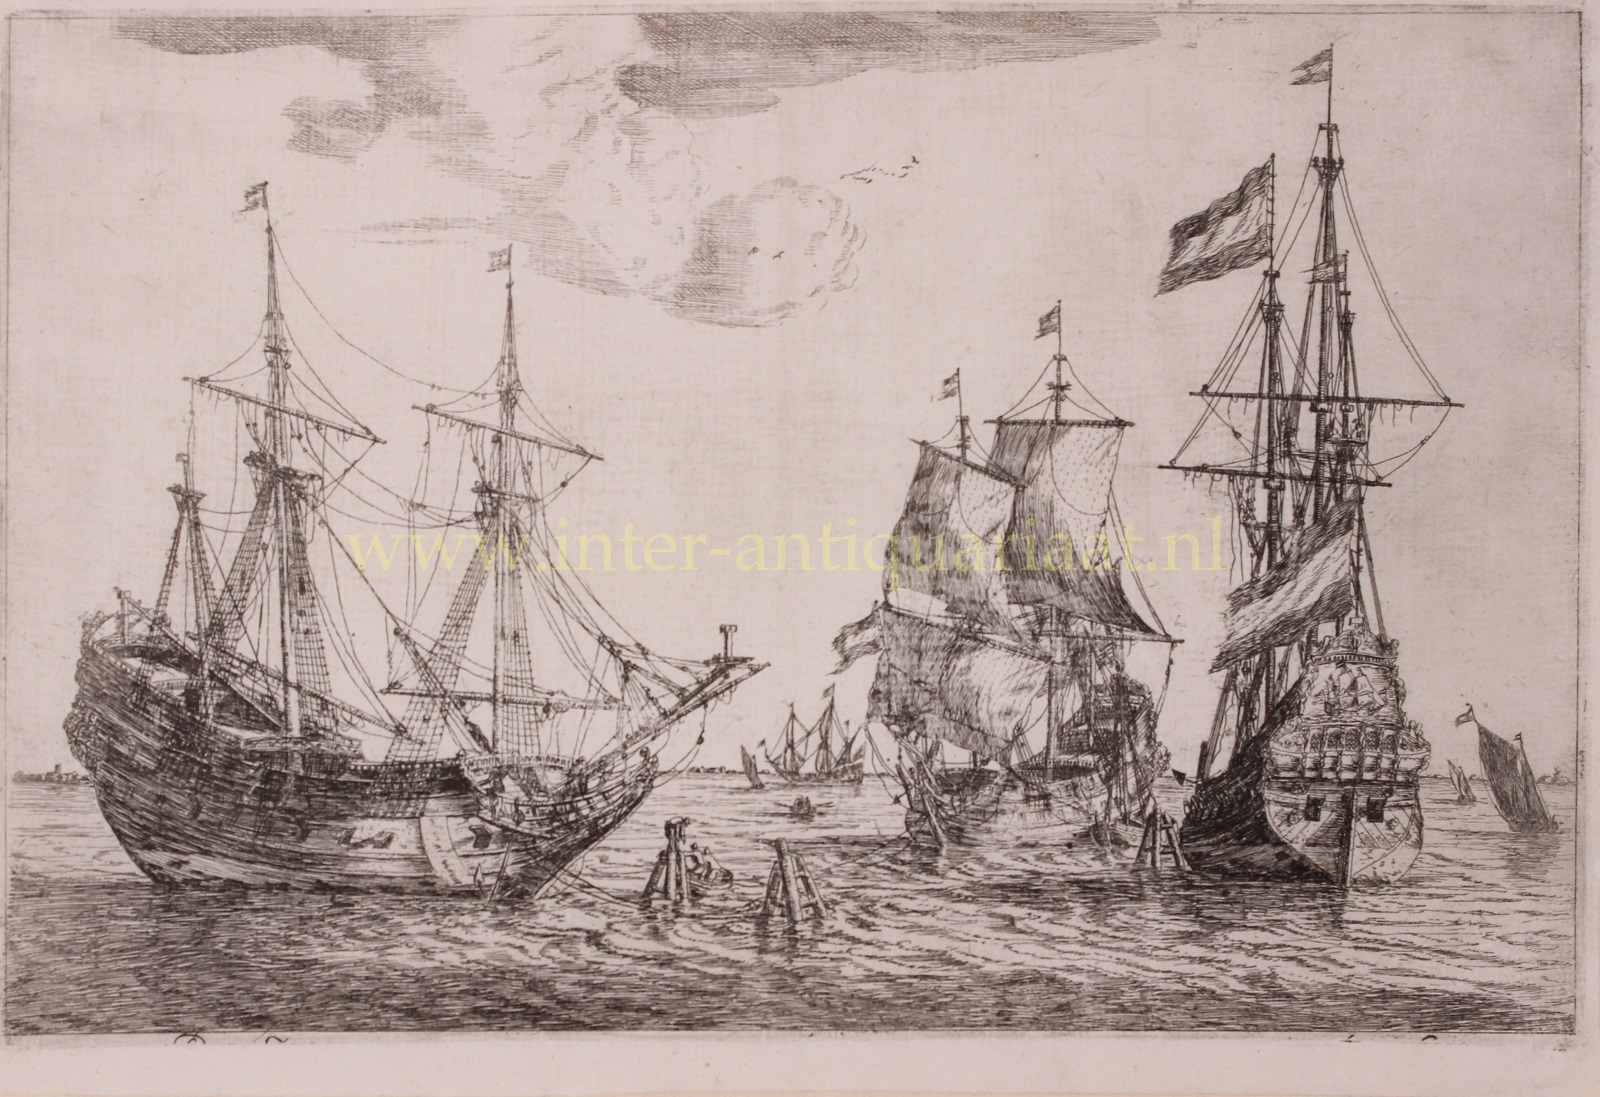 Nooms-- Reinier - Three moored sailing vessels - Reinier Nooms (Zeeman), ca. 1660